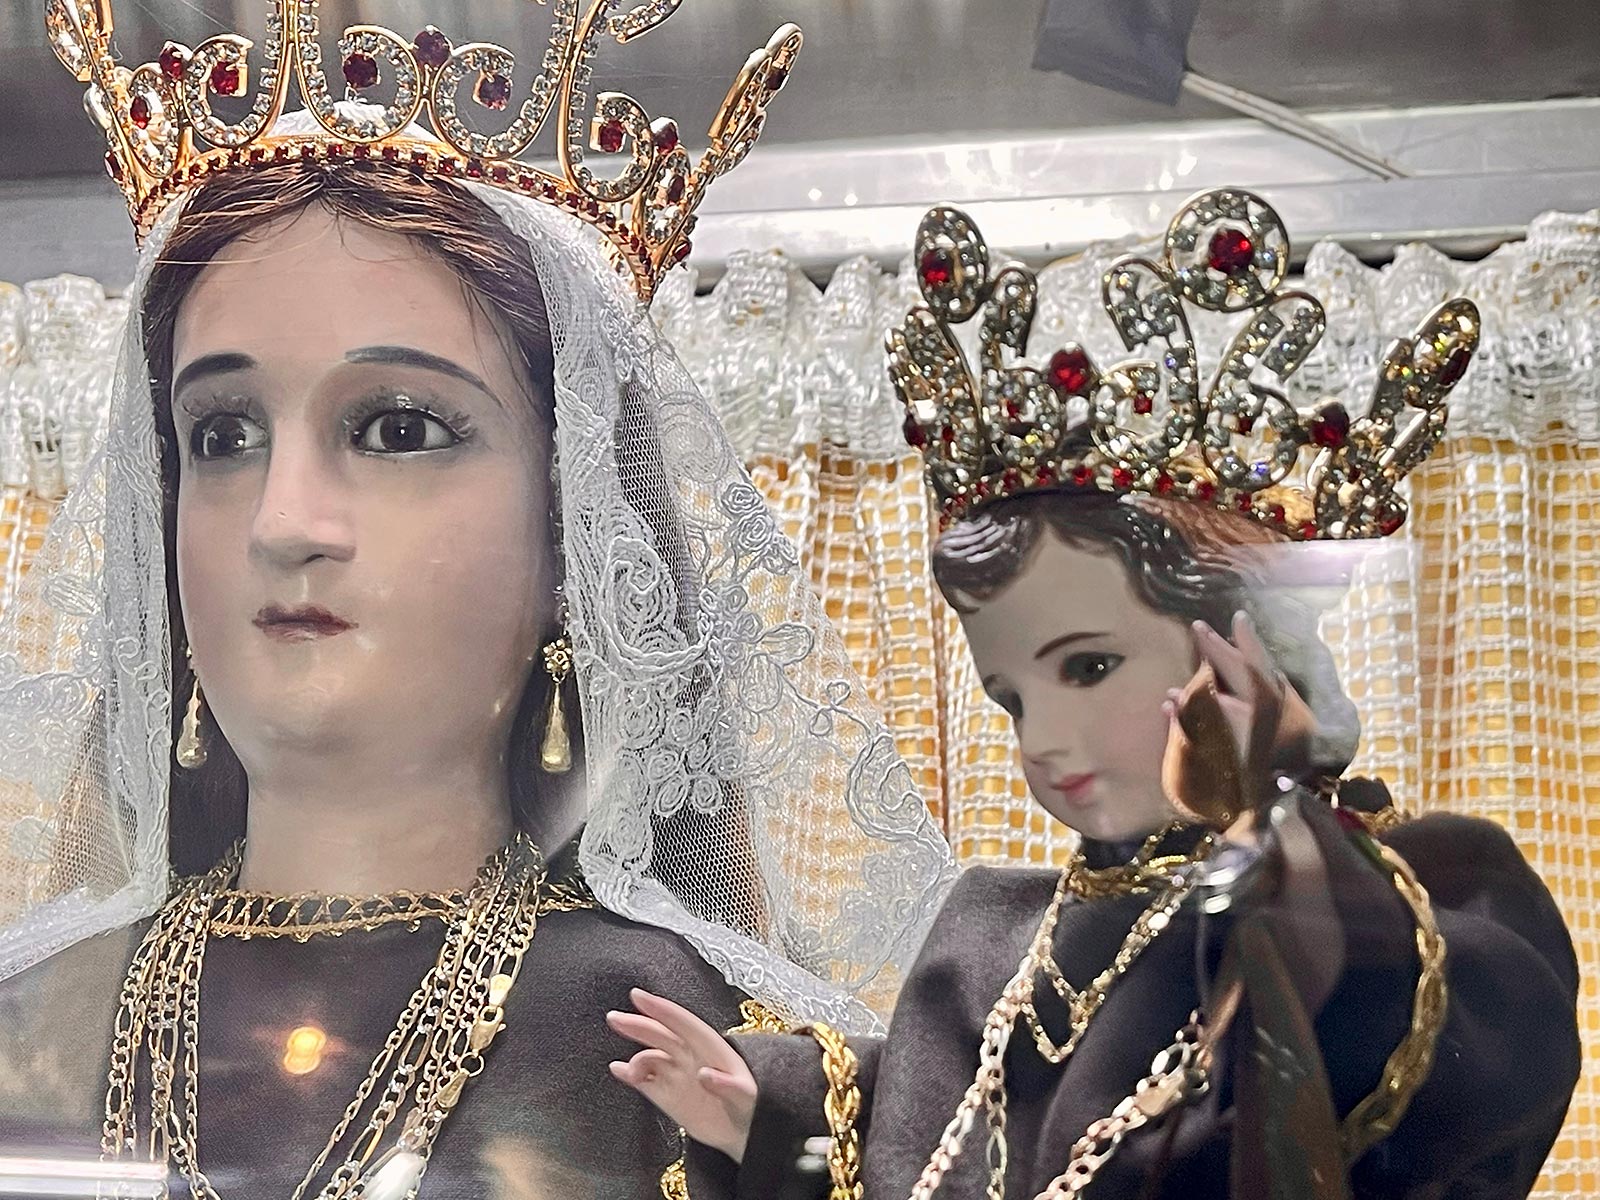 Miraculous statue of Mary holding baby Jesus, Sanctuary of Nuestra Senora del Carmen, Catemaco